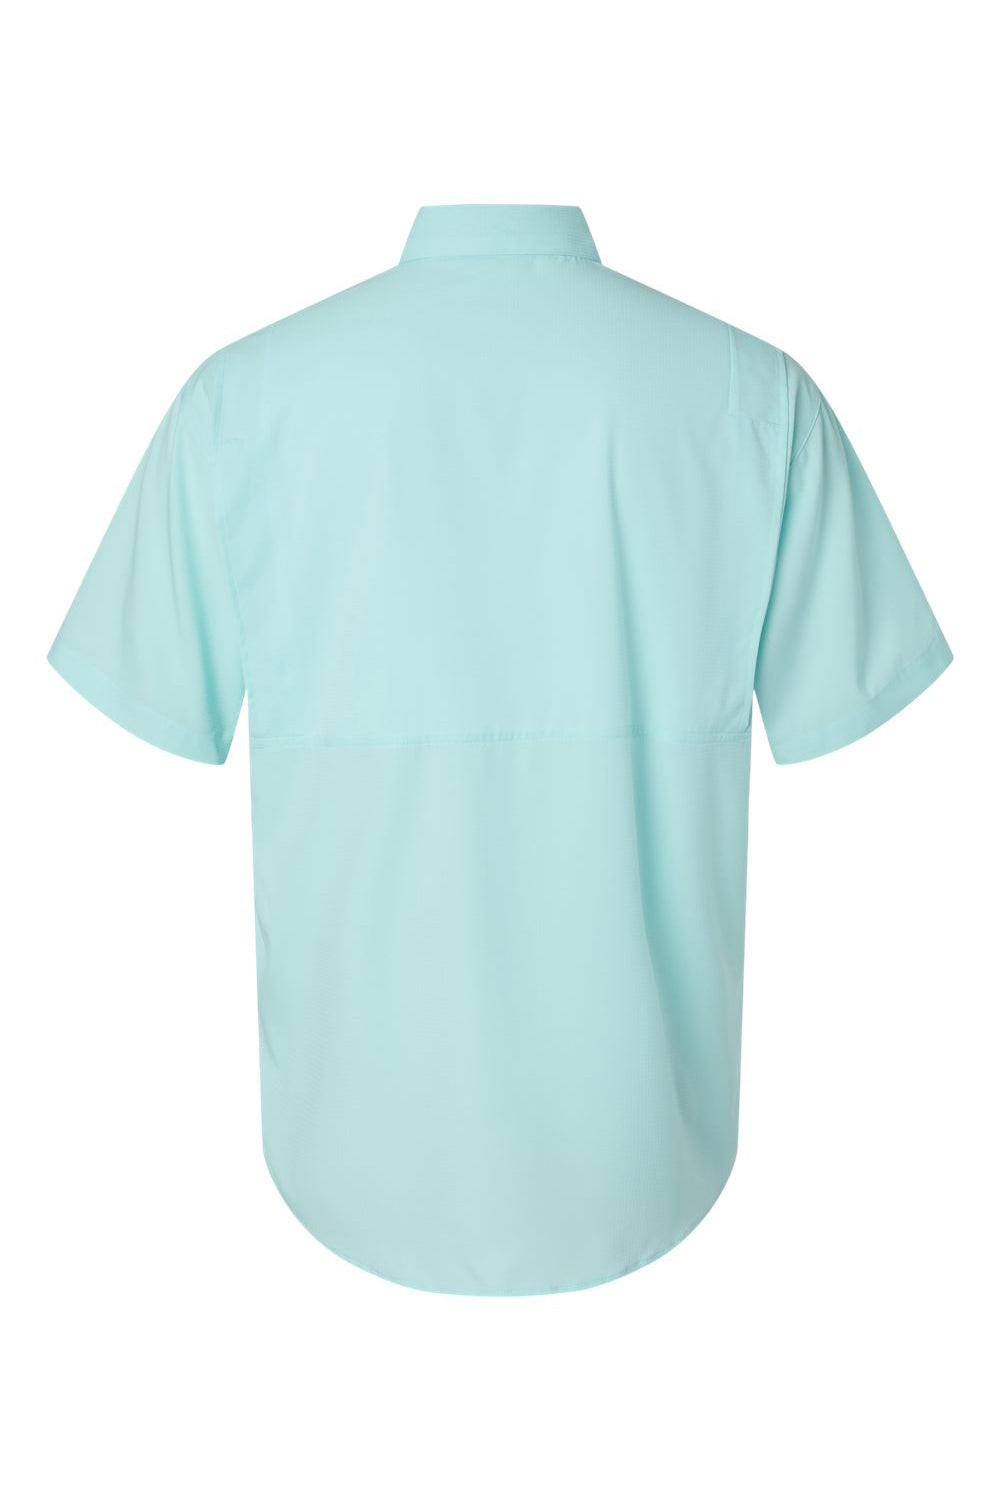 Paragon 700 Mens Hatteras Performance Short Sleeve Button Down Shirt Aqua Blue Flat Back